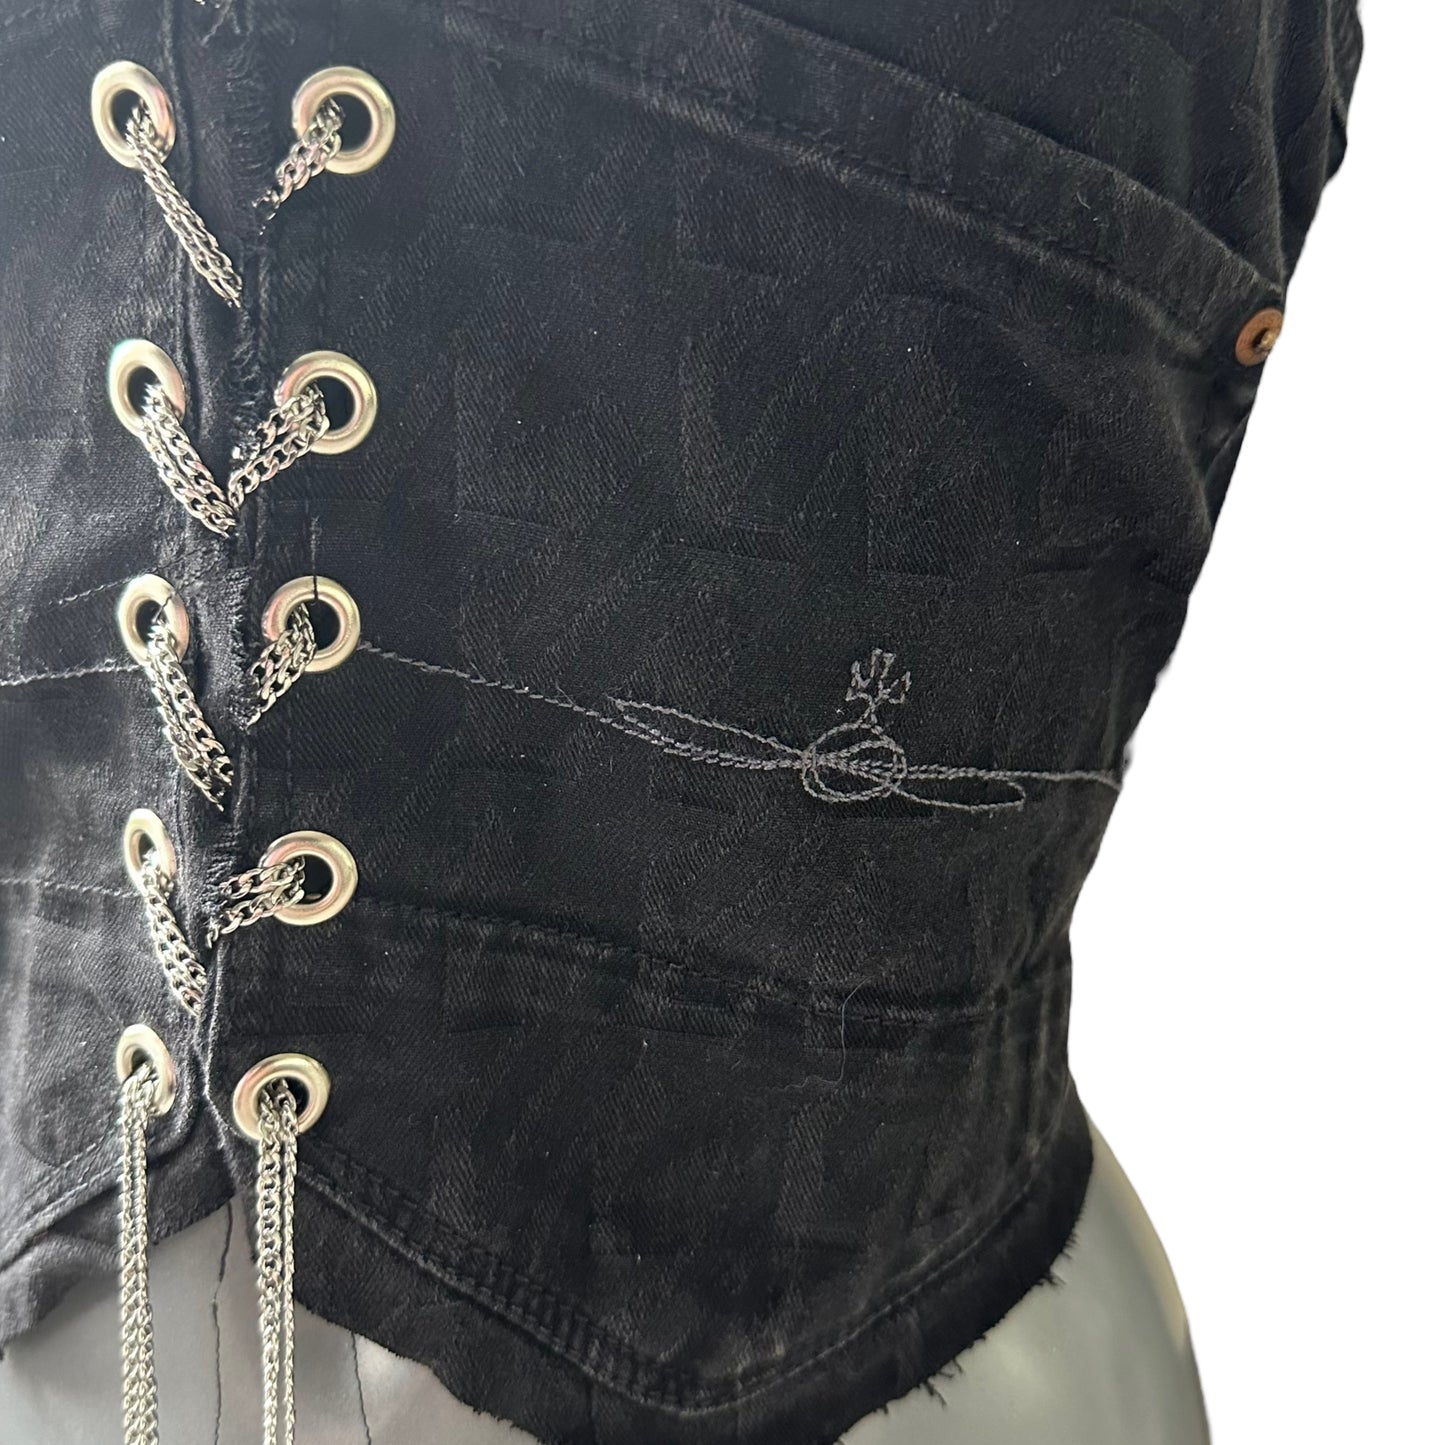 Authentic Vivienne Westwood Jeans Reworked Black Denim Corset Top 8 10 12